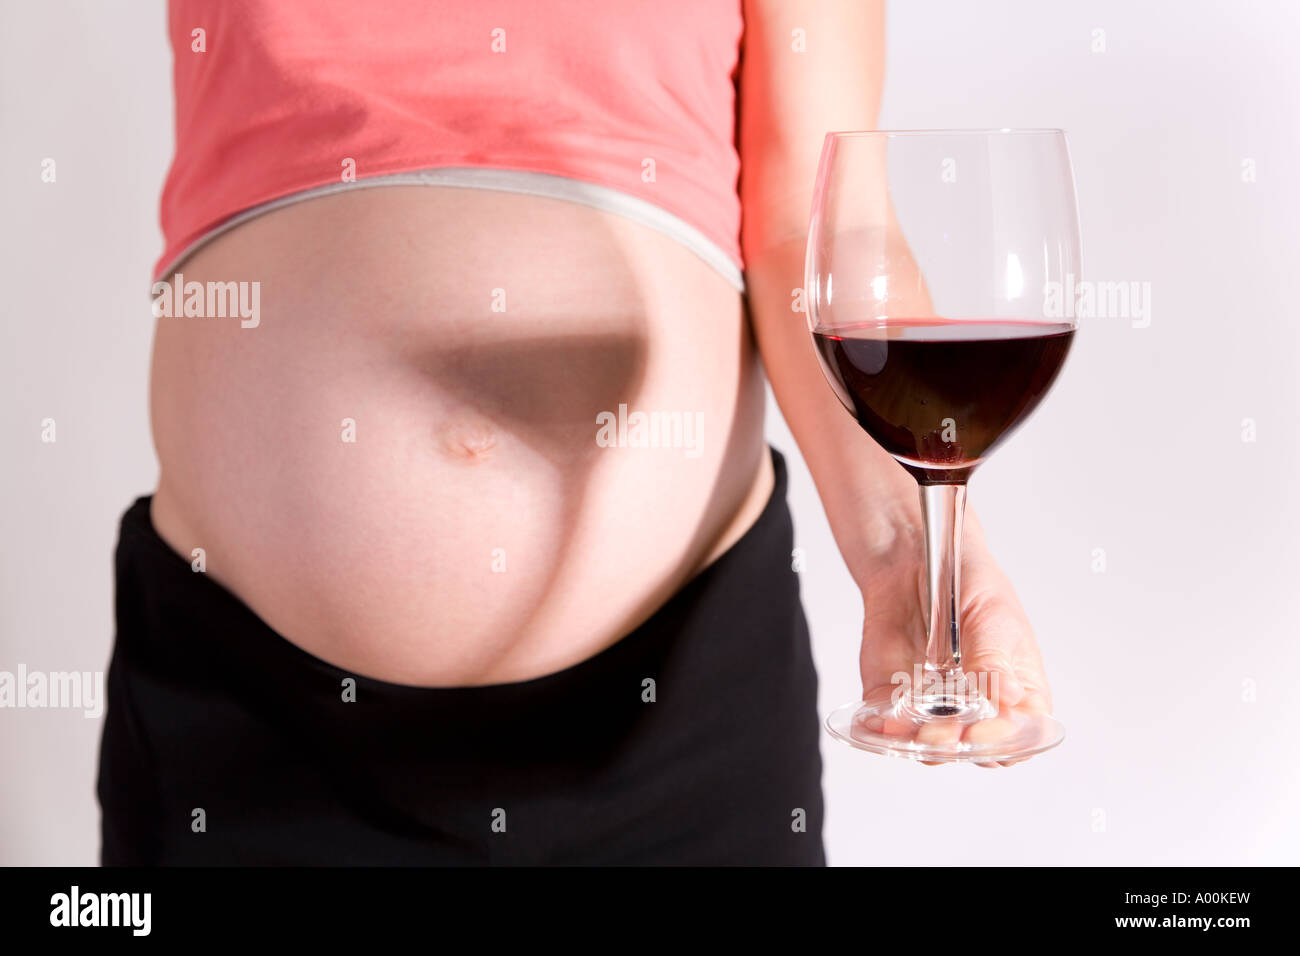 Alcohol & pregnancy Stock Photo